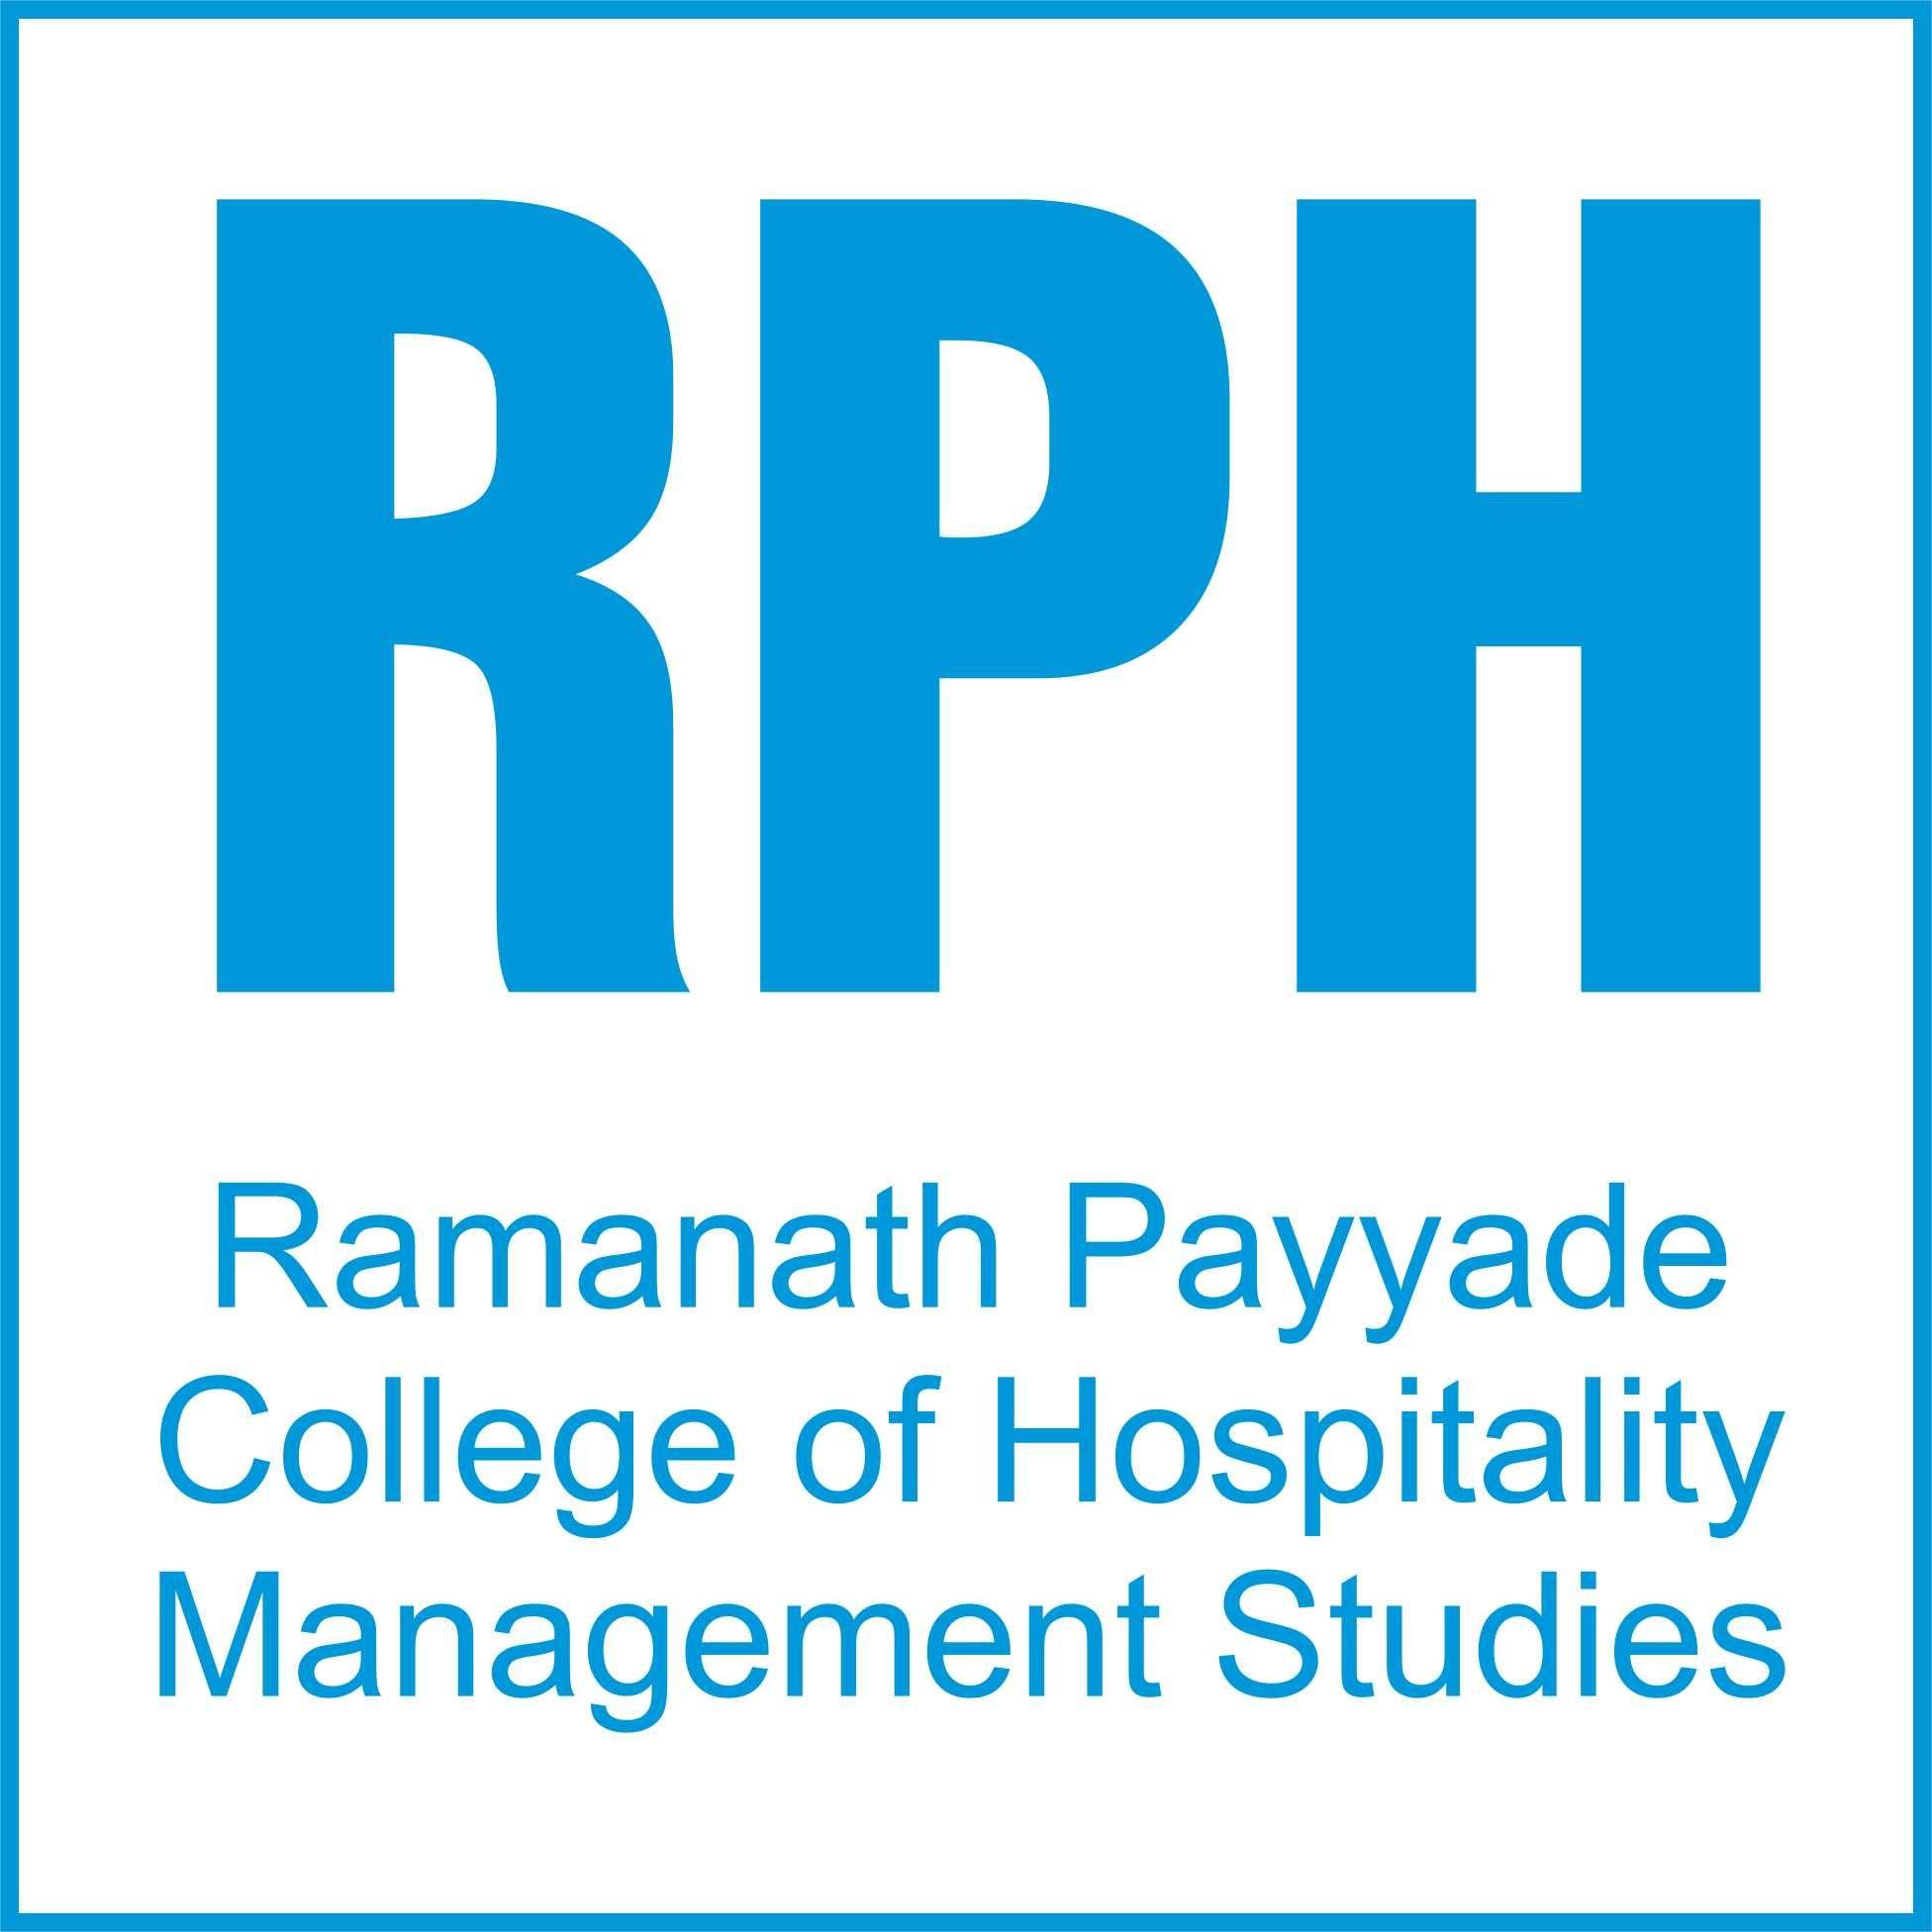 RPh Logo - RPH. Ramanath Payyade College of Hospitality Management Studies